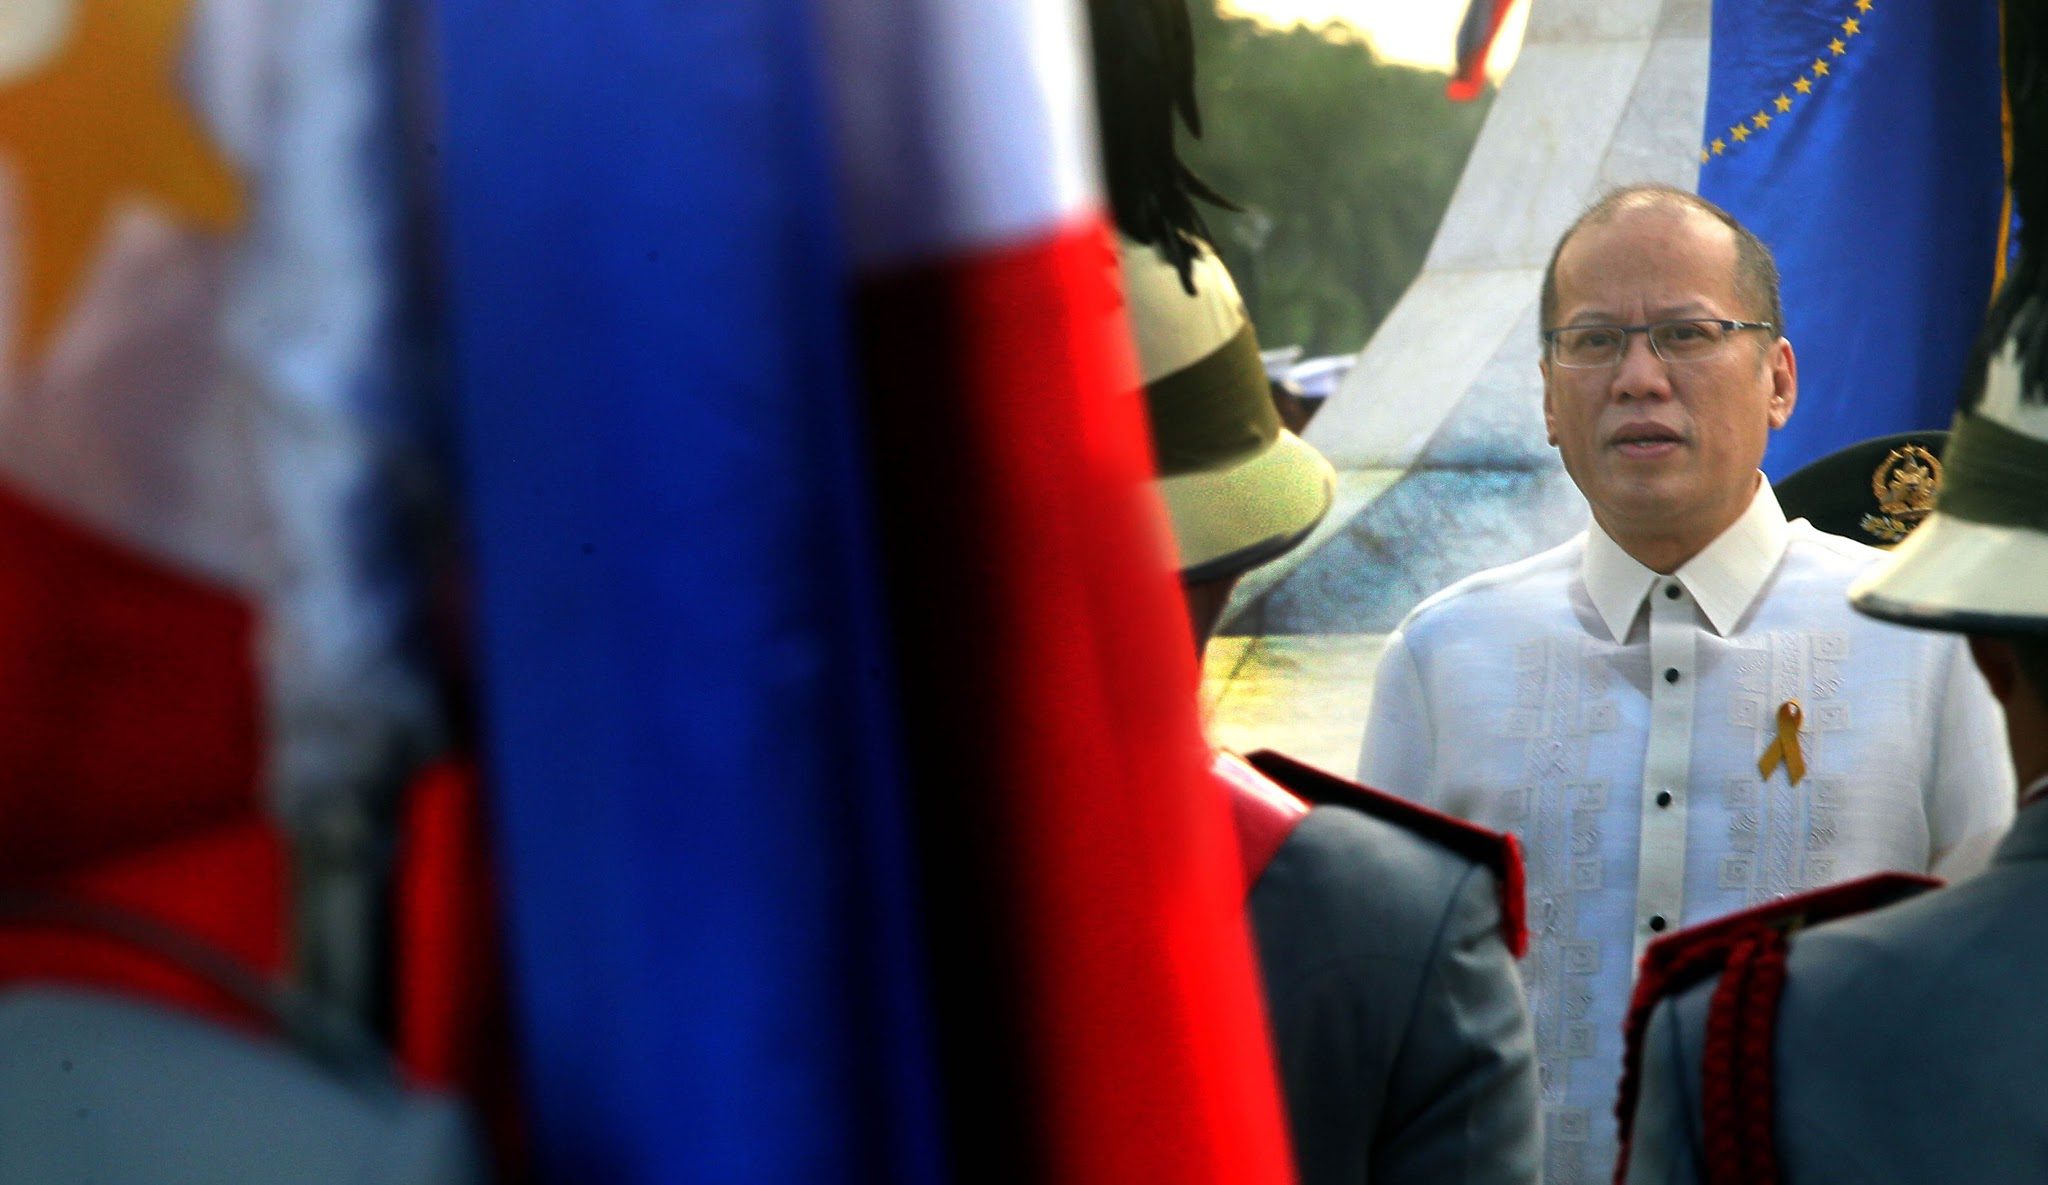 Noynoy Aquino: Never forget Martial Law victims – spox